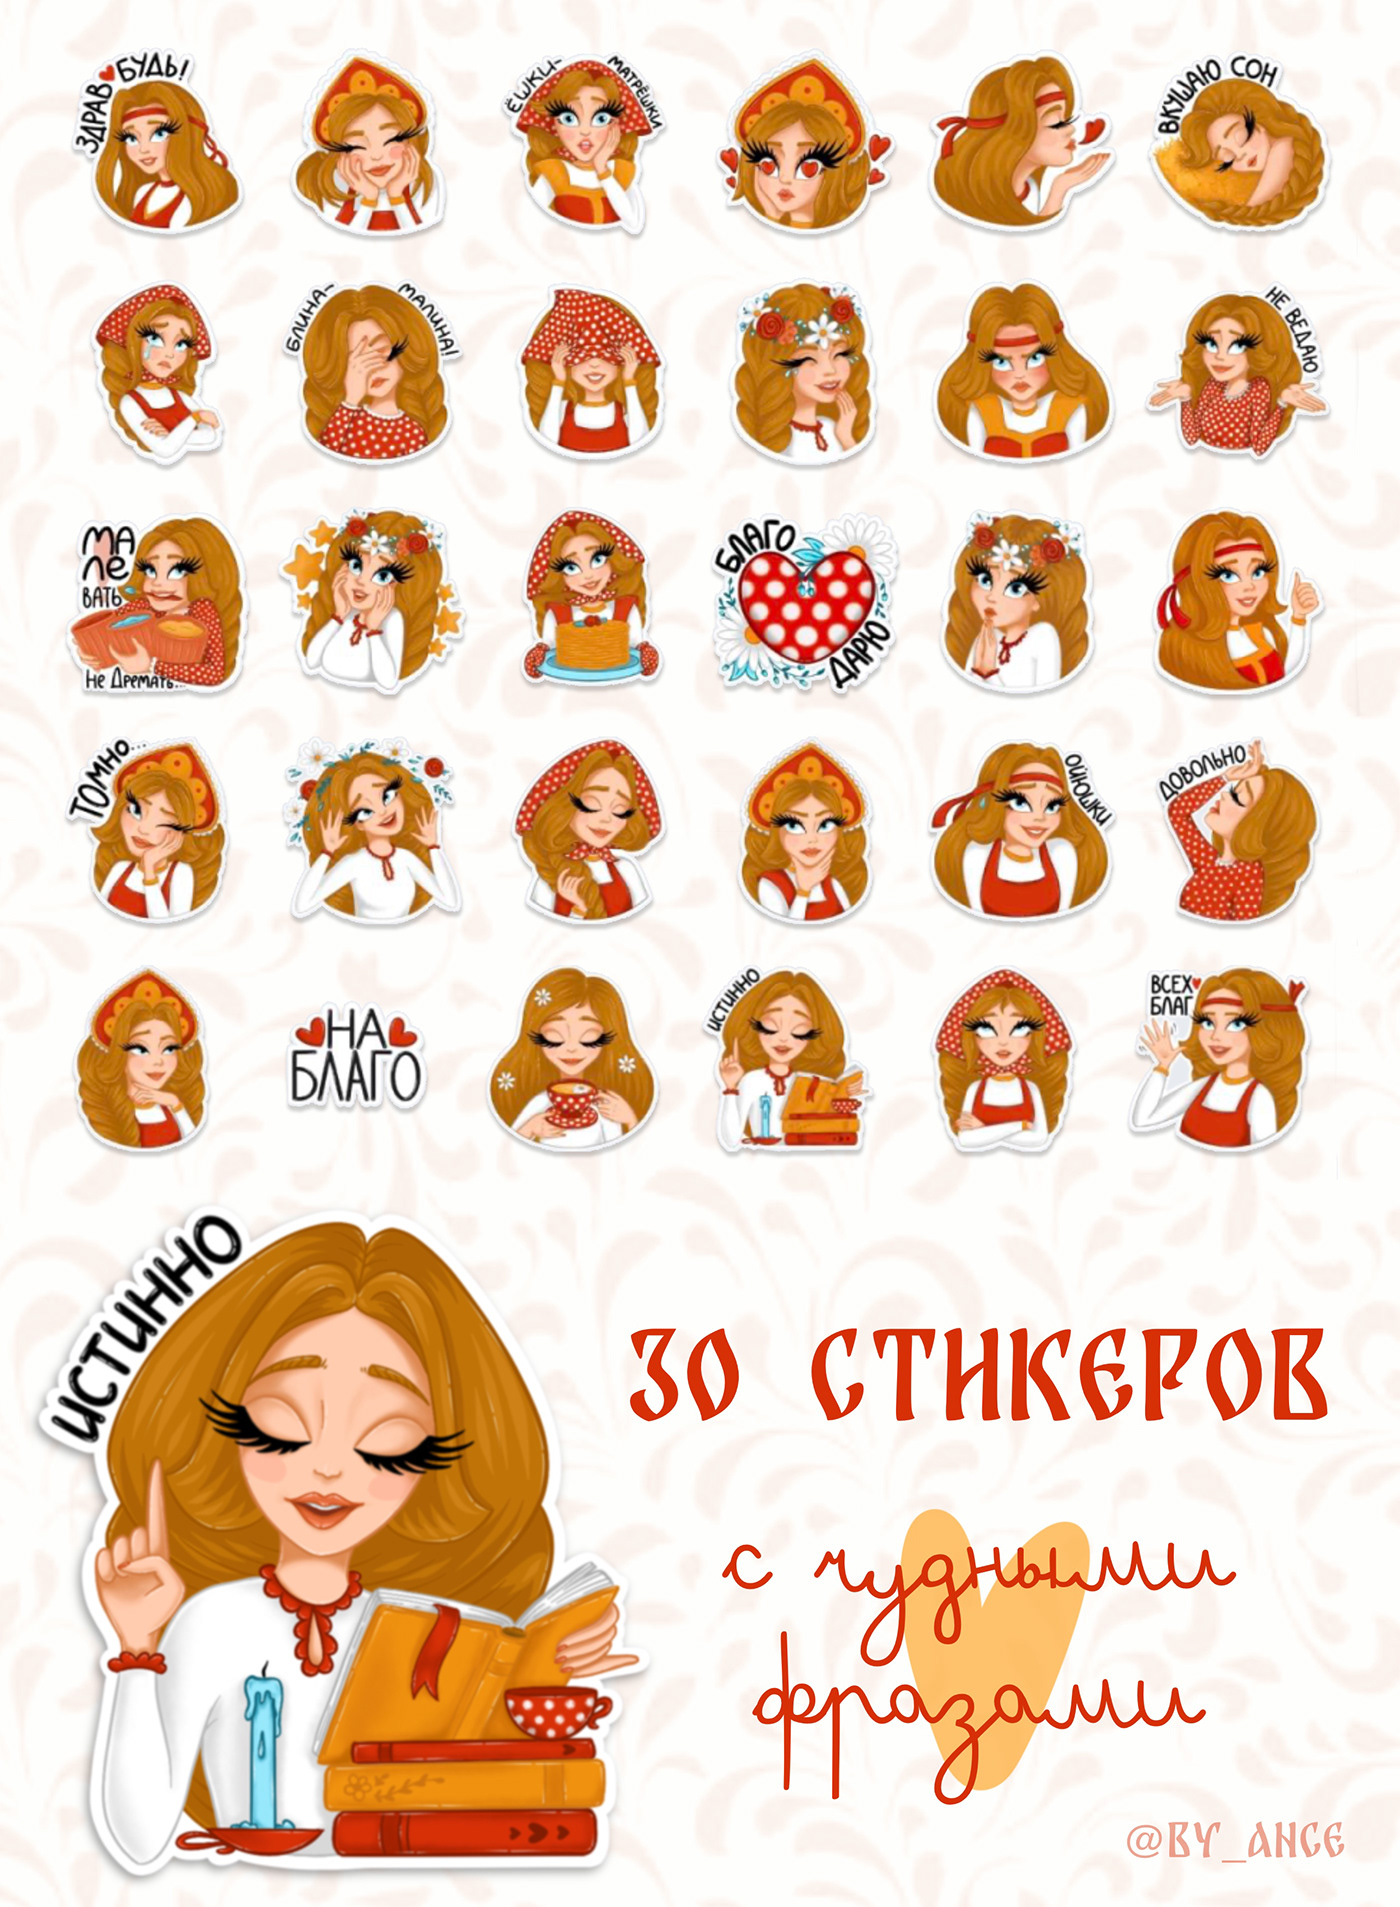 russian girl sticker sticker pack stickers Telegram Vasilisa viber WhatsApp Василиса русская красавица стикерпак стикеры стикеры для телеграма